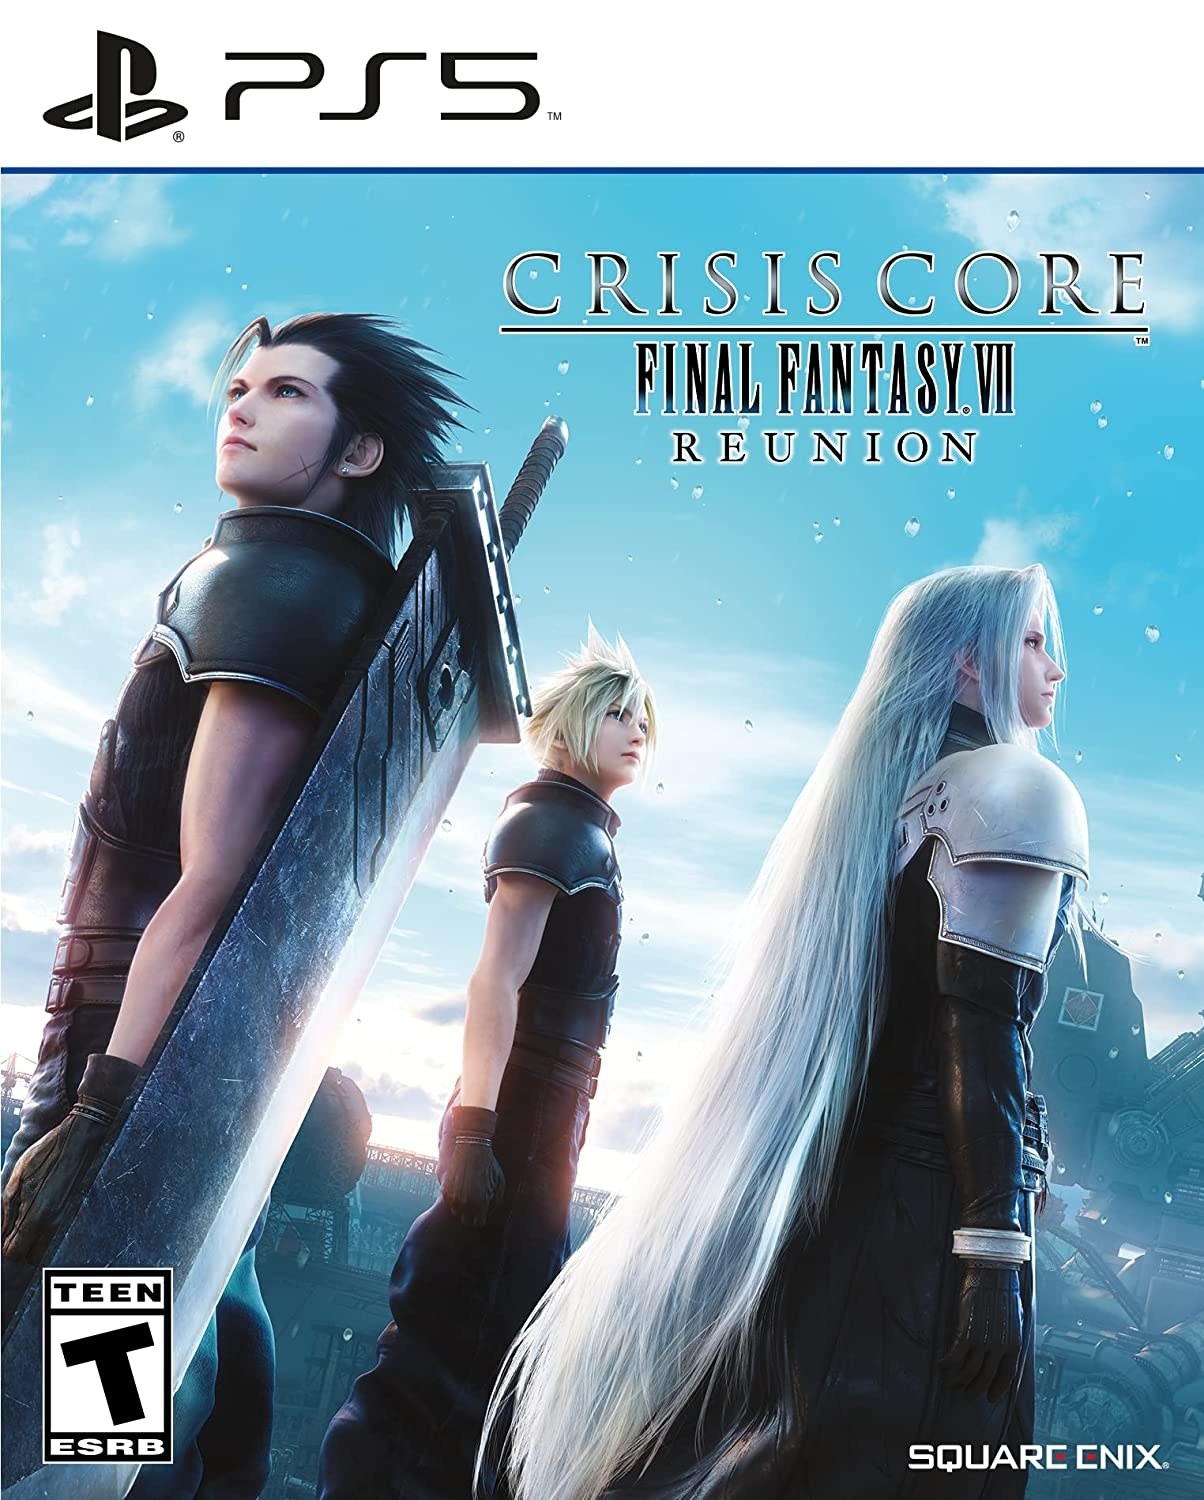 The cover of Crisis Core: Final Fantasy VII Reunion